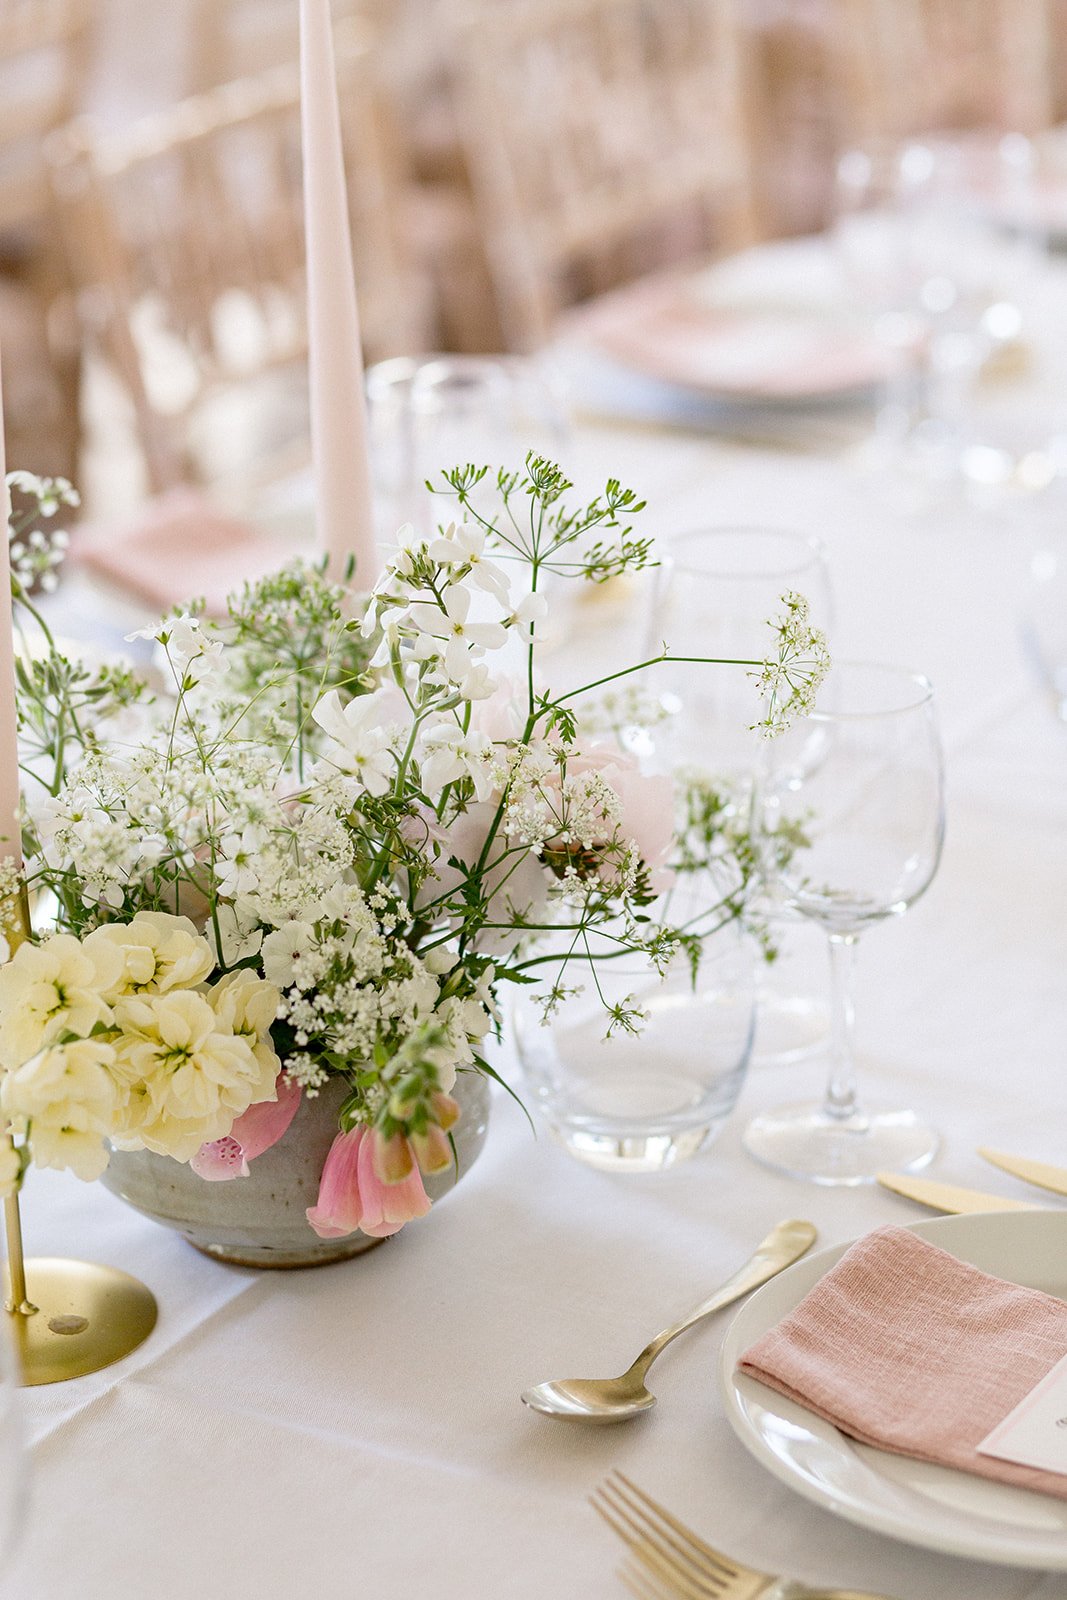 Low bowl arrangement for wedding tables